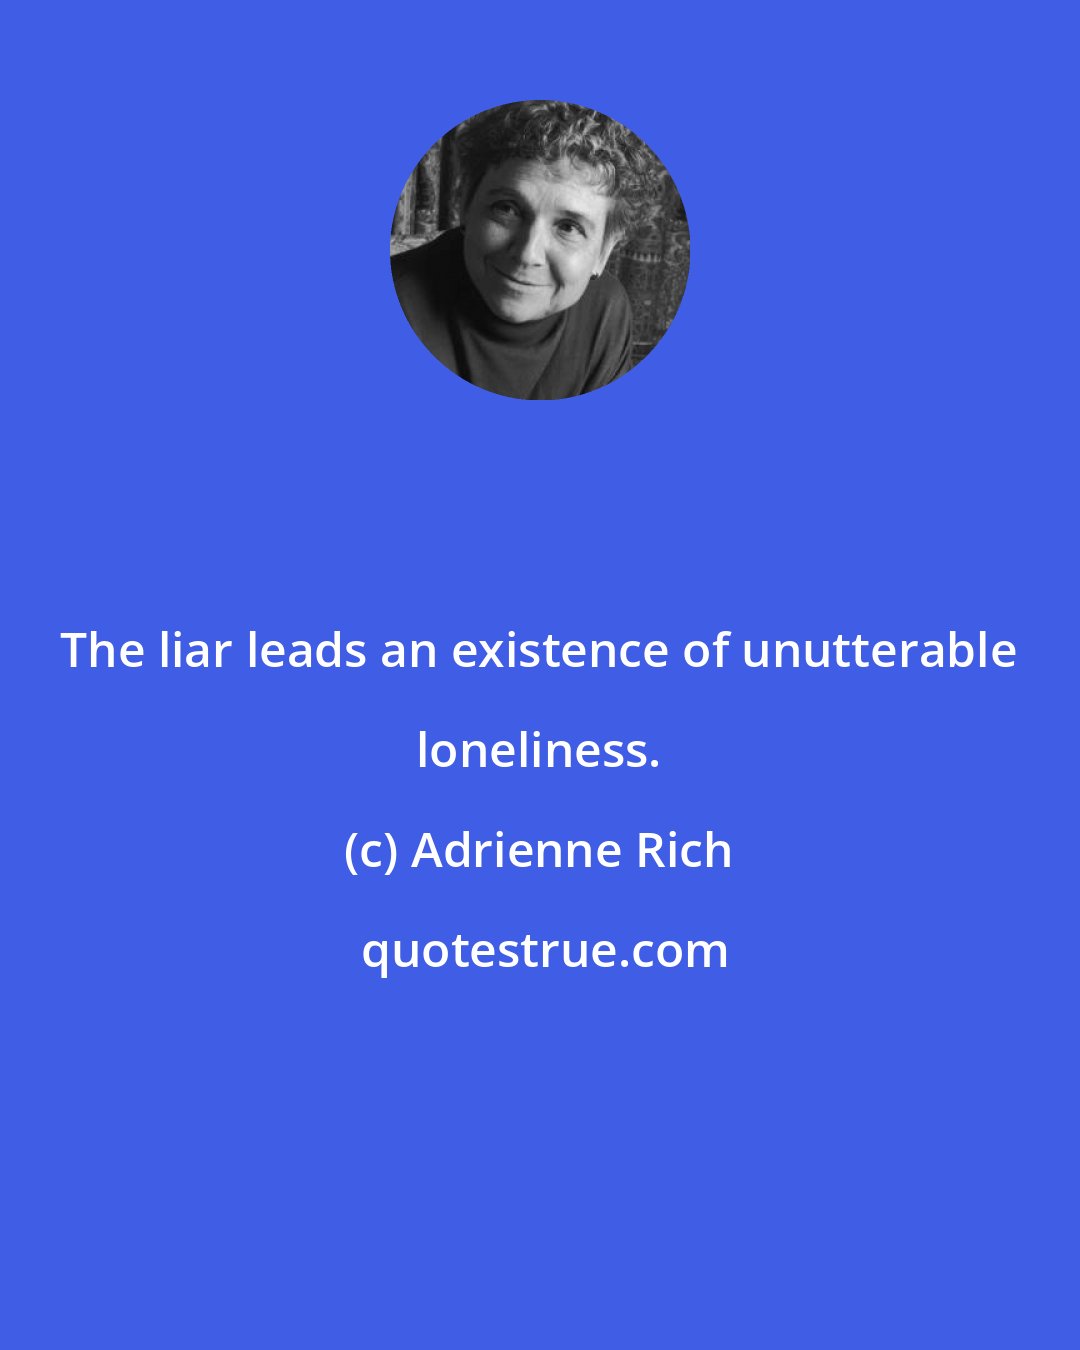 Adrienne Rich: The liar leads an existence of unutterable loneliness.